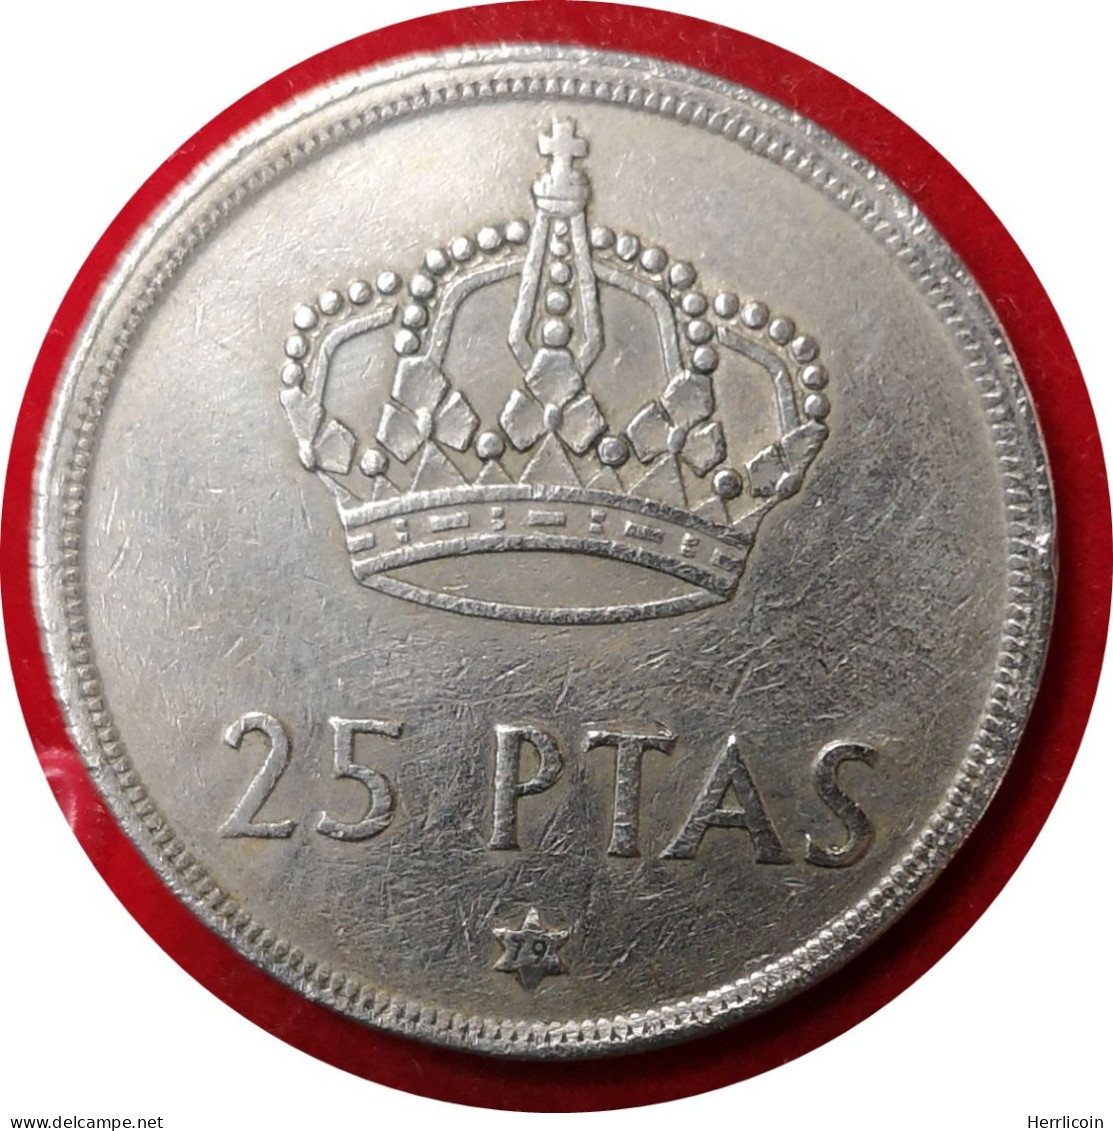 Monnaie Espagne - 1979 - 25 Pesetas Juan Carlos I étoile - 25 Pesetas